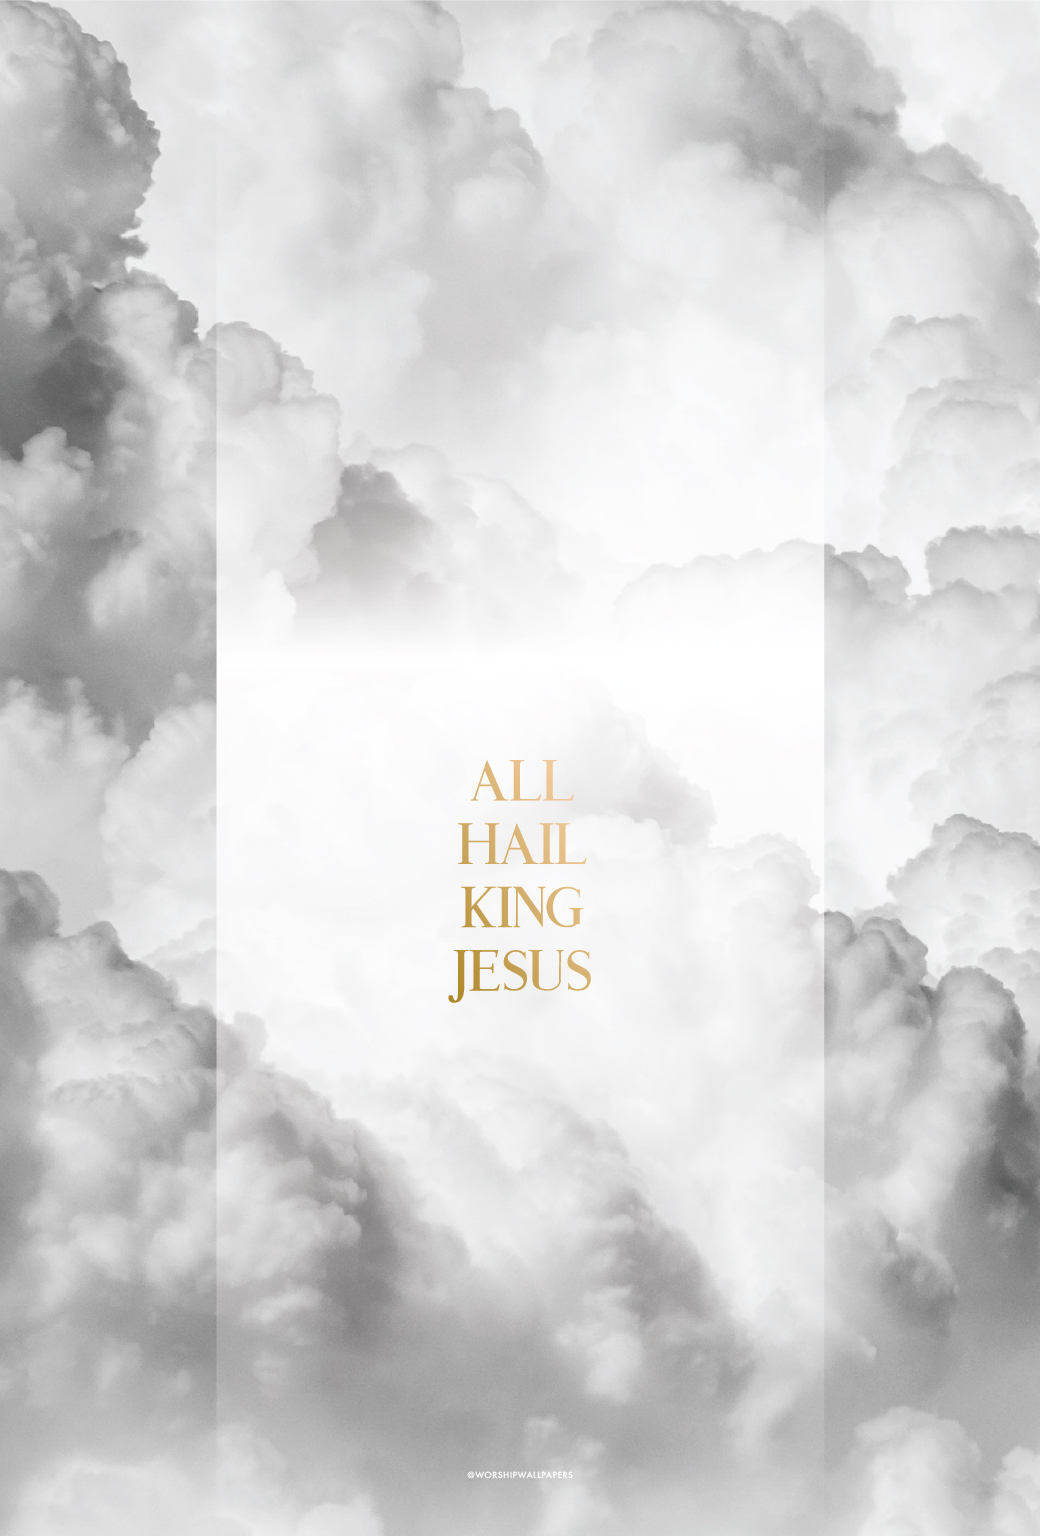 Jesus Is King Wallpapers